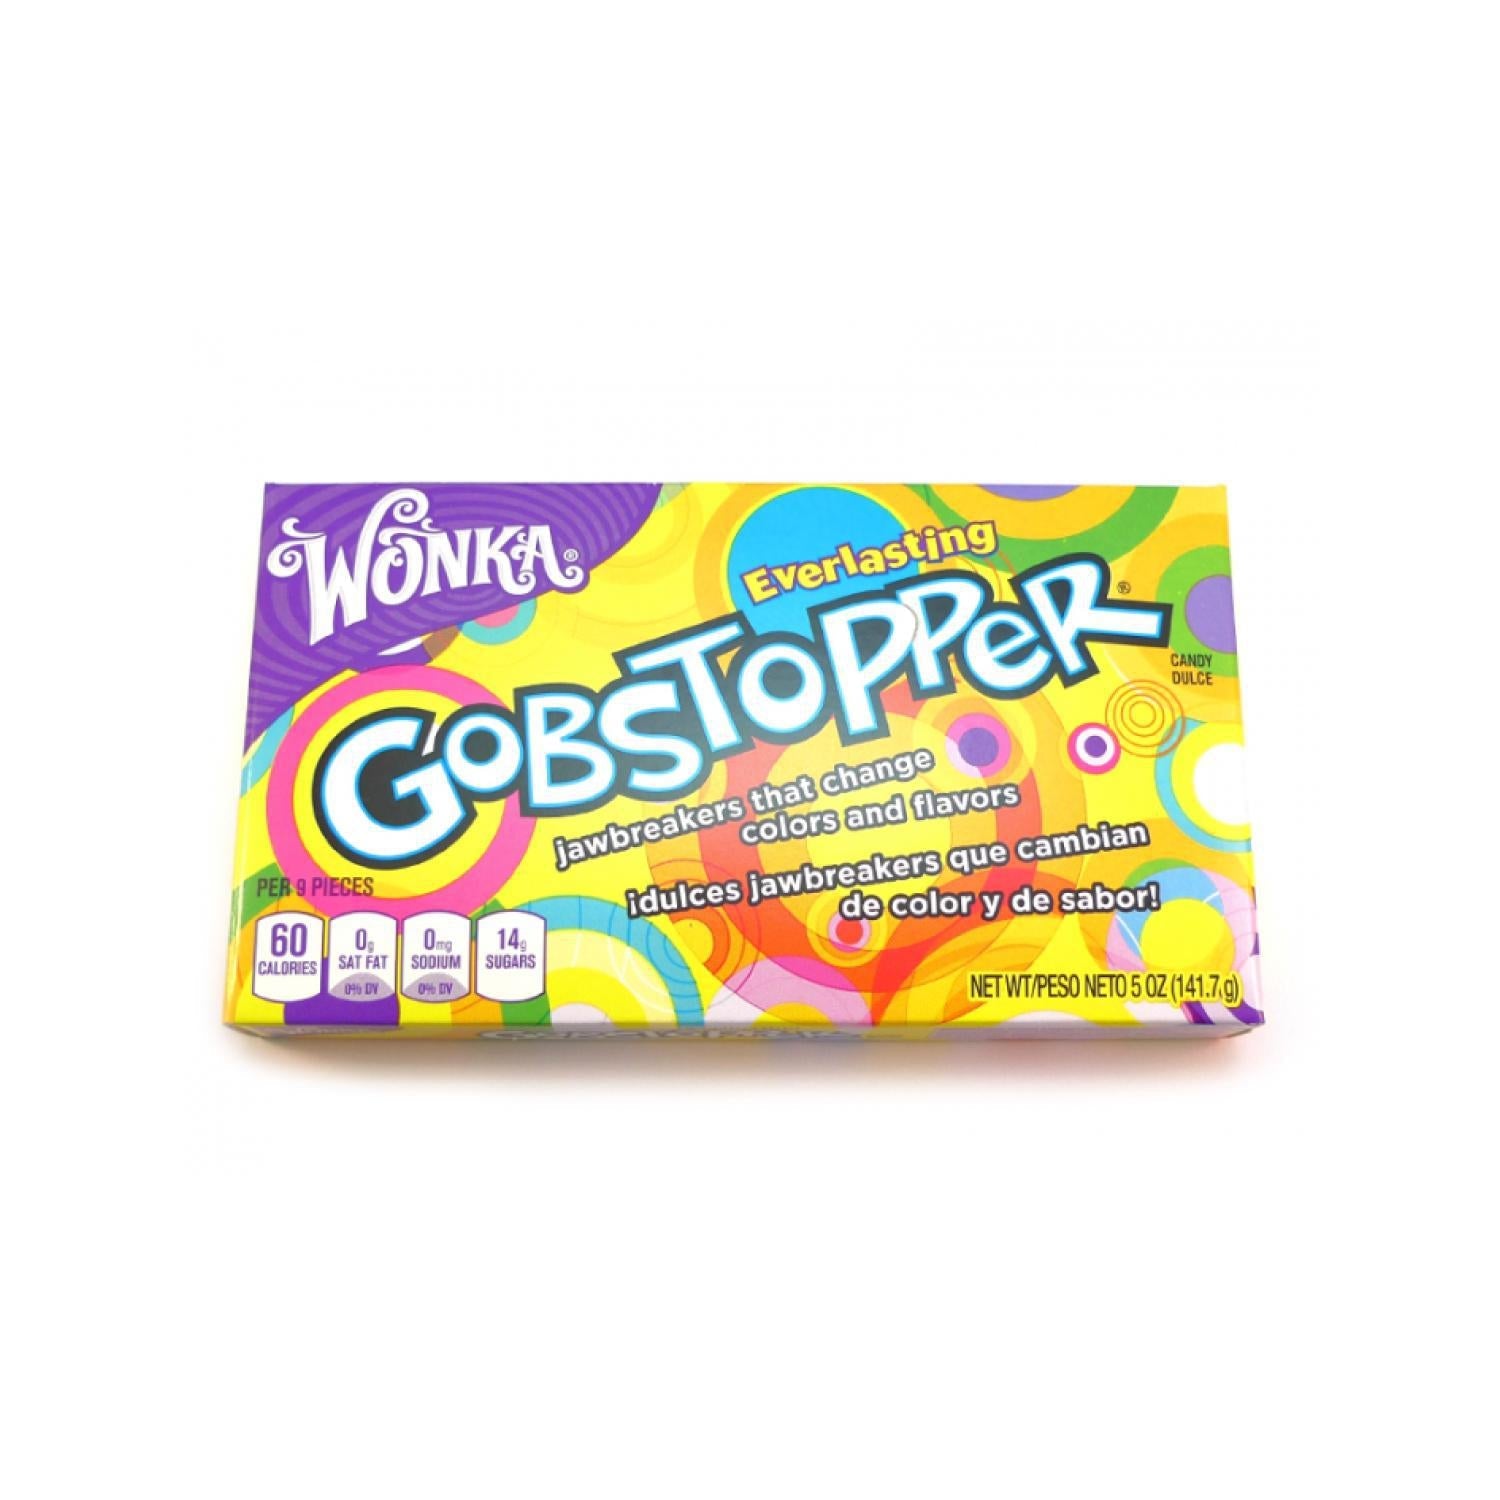 Willy Wonka - Everlasting Gobstopper!